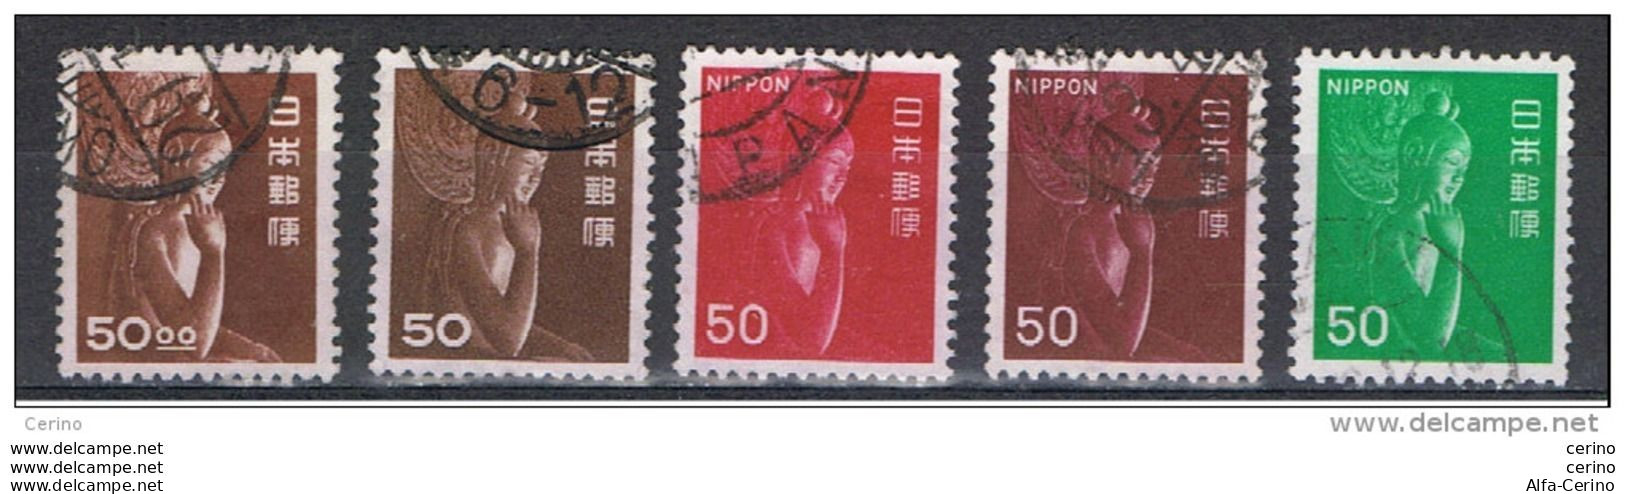 JAPAN:  1951/76  KWANNON  -  KOMPLET  SET  5  USED  STAMPS  -  YV/TELL. 469//1177 - Usados